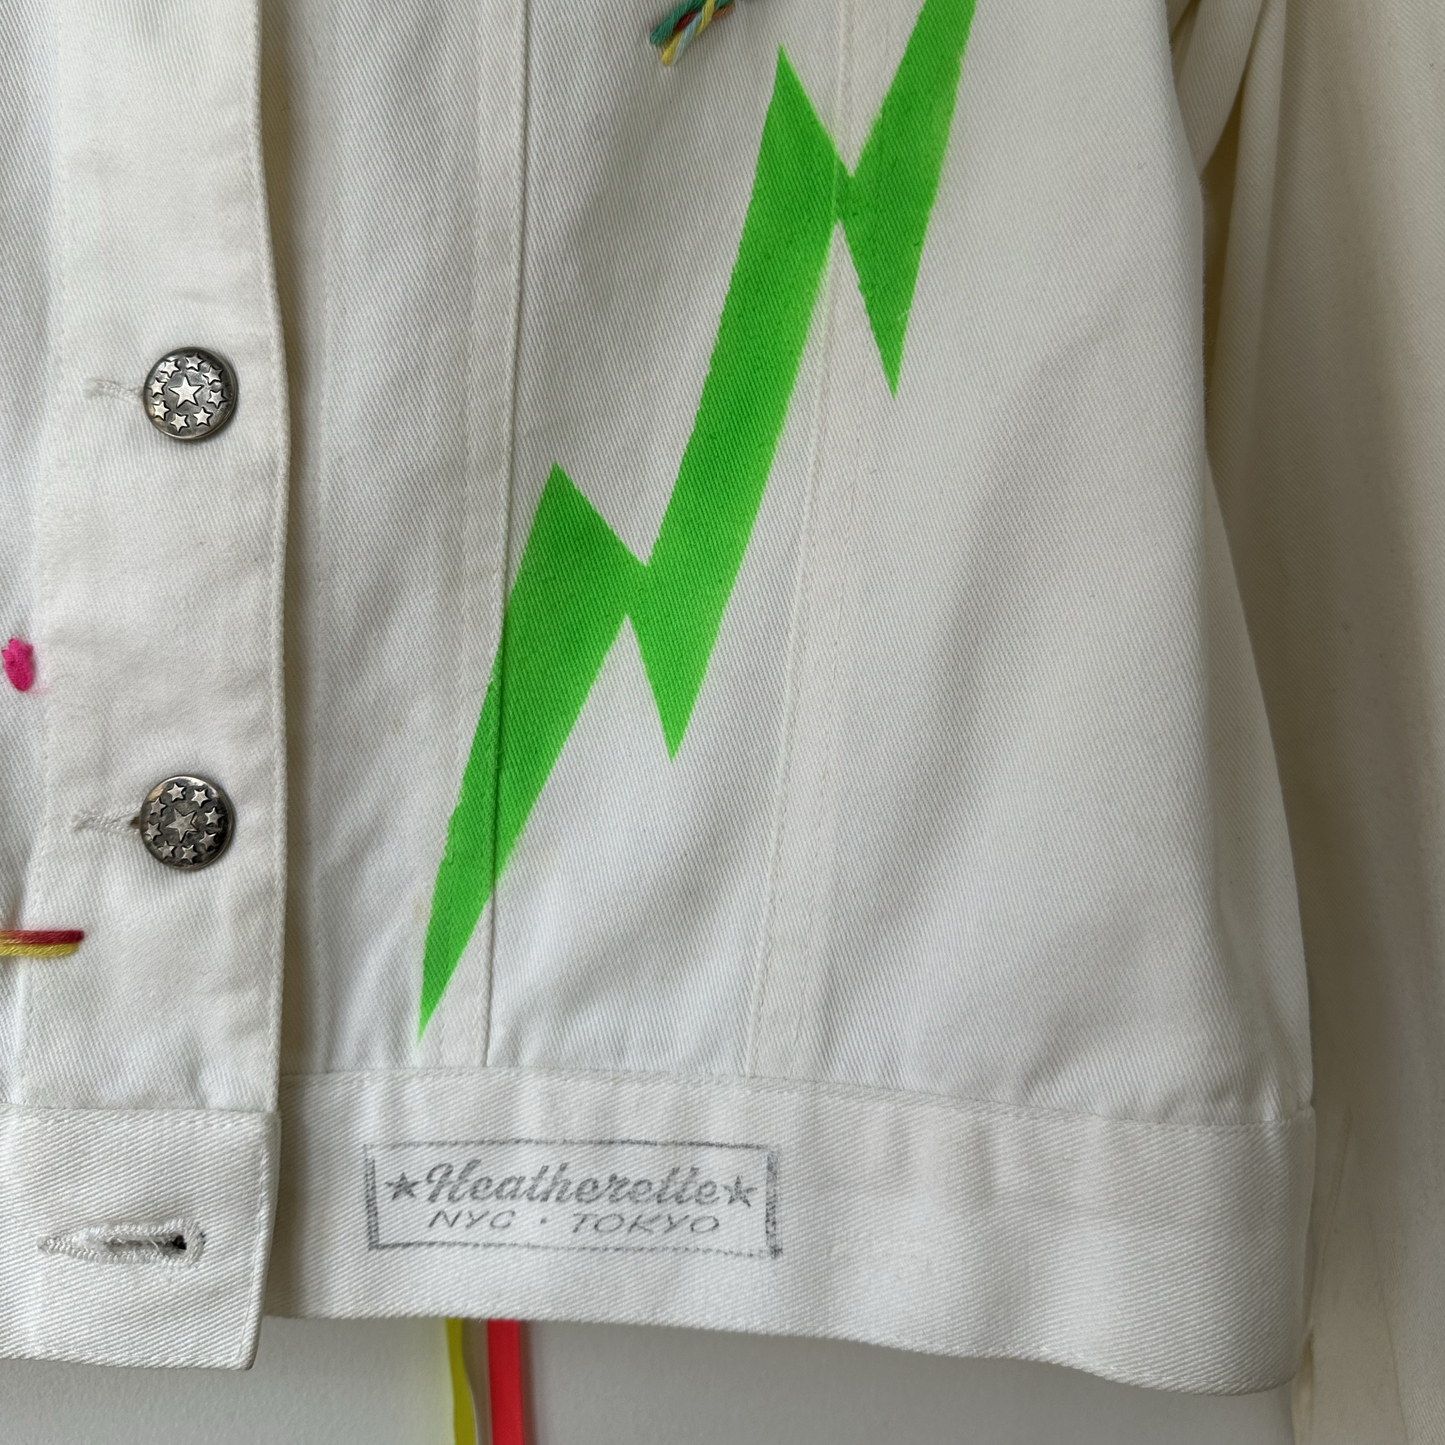 Heatherette Embroidered Jacket, white